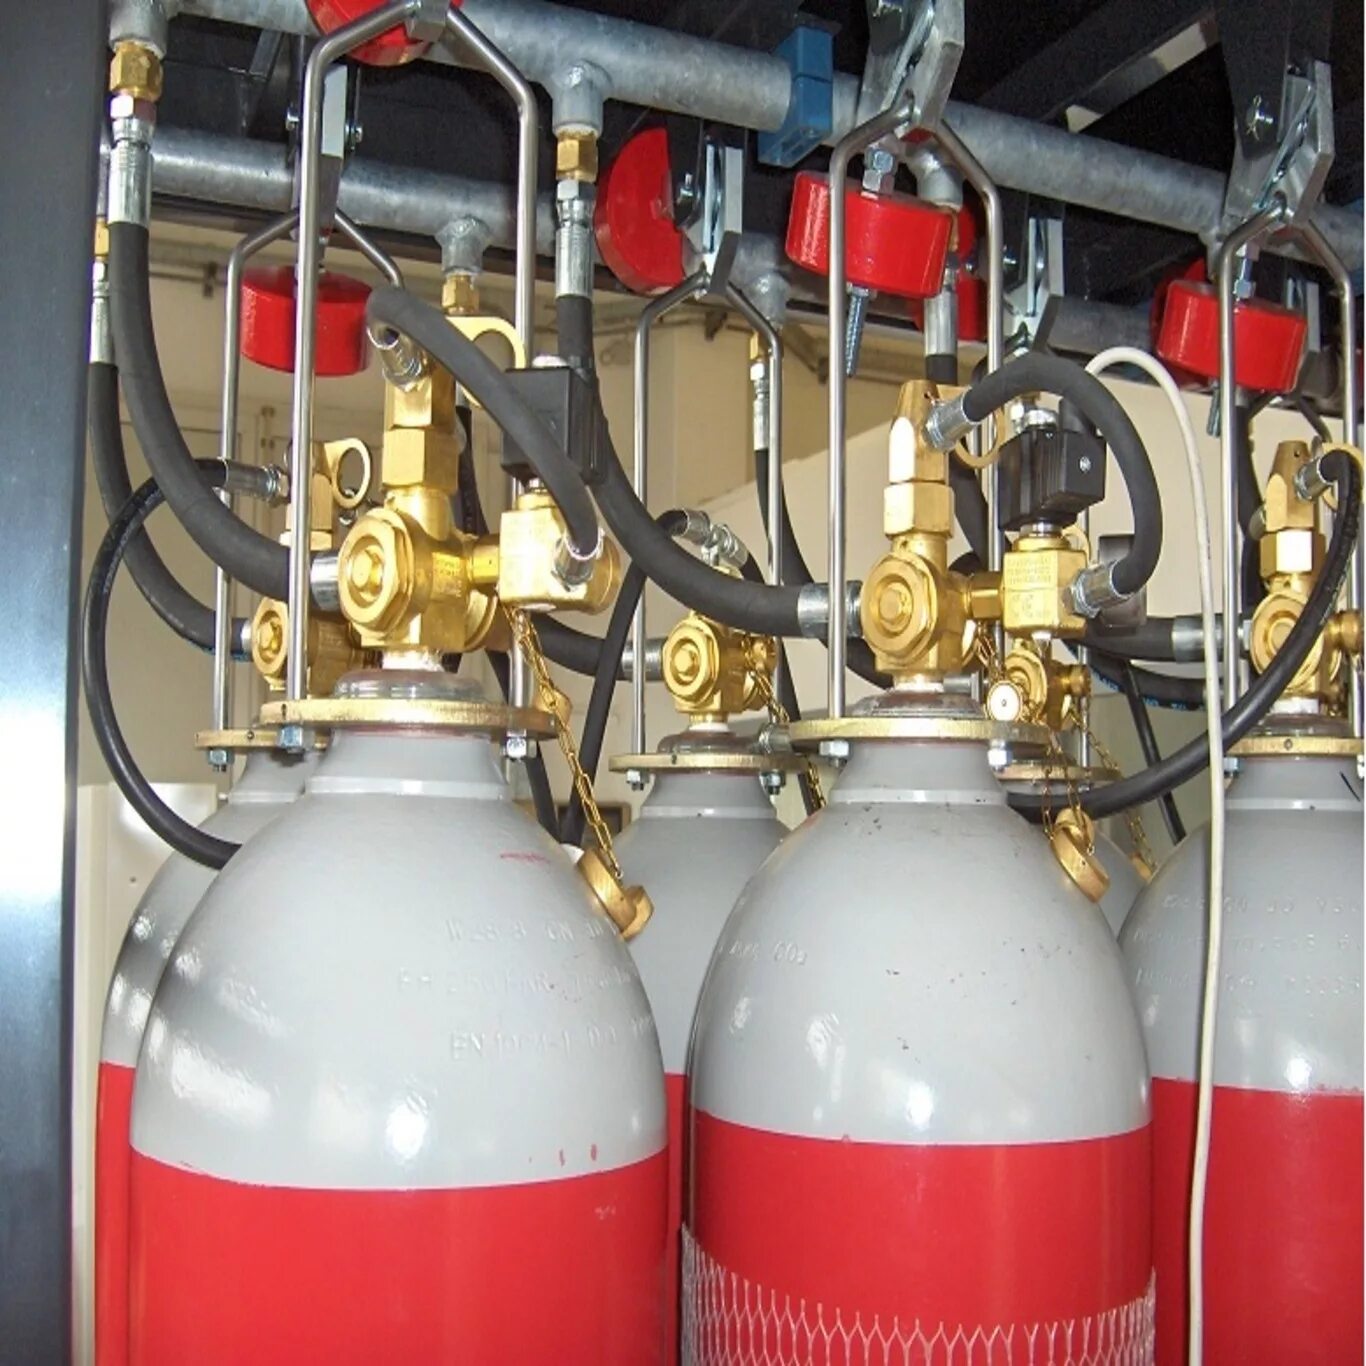 Модуль газового пожаротушения LPG 128 c2f5h, пентафторметан. Модуль газового пожаротушения LPG. Хладон 125. Углекислотная система пожаротушения на судне. Модуль газового пожаротушения МПГ-65-80-32-П.